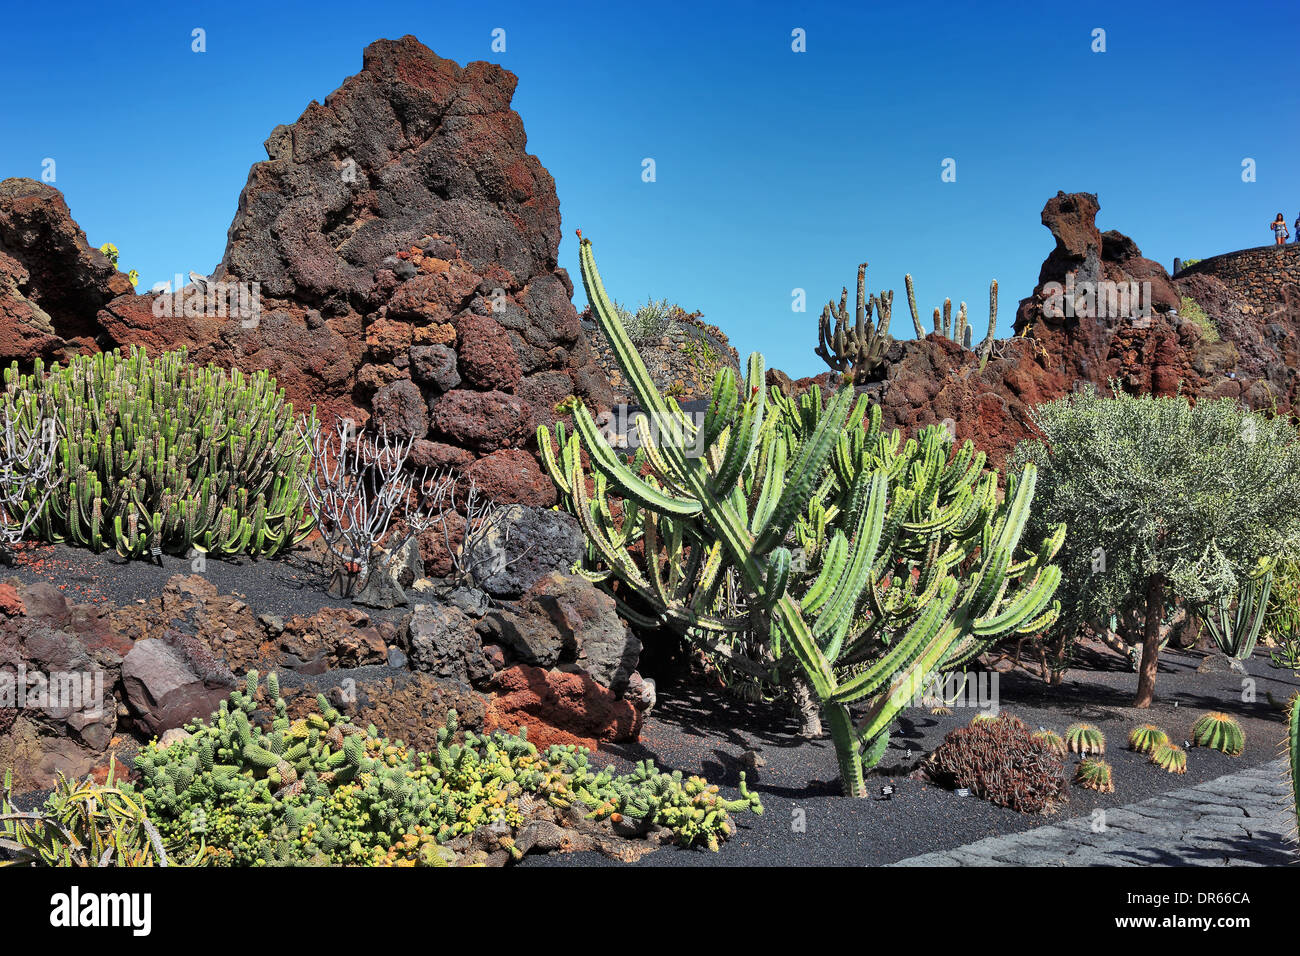 Jardin de cactus jardin de cactus à Guatiza, Lanzarote, îles canaries, espagne Banque D'Images